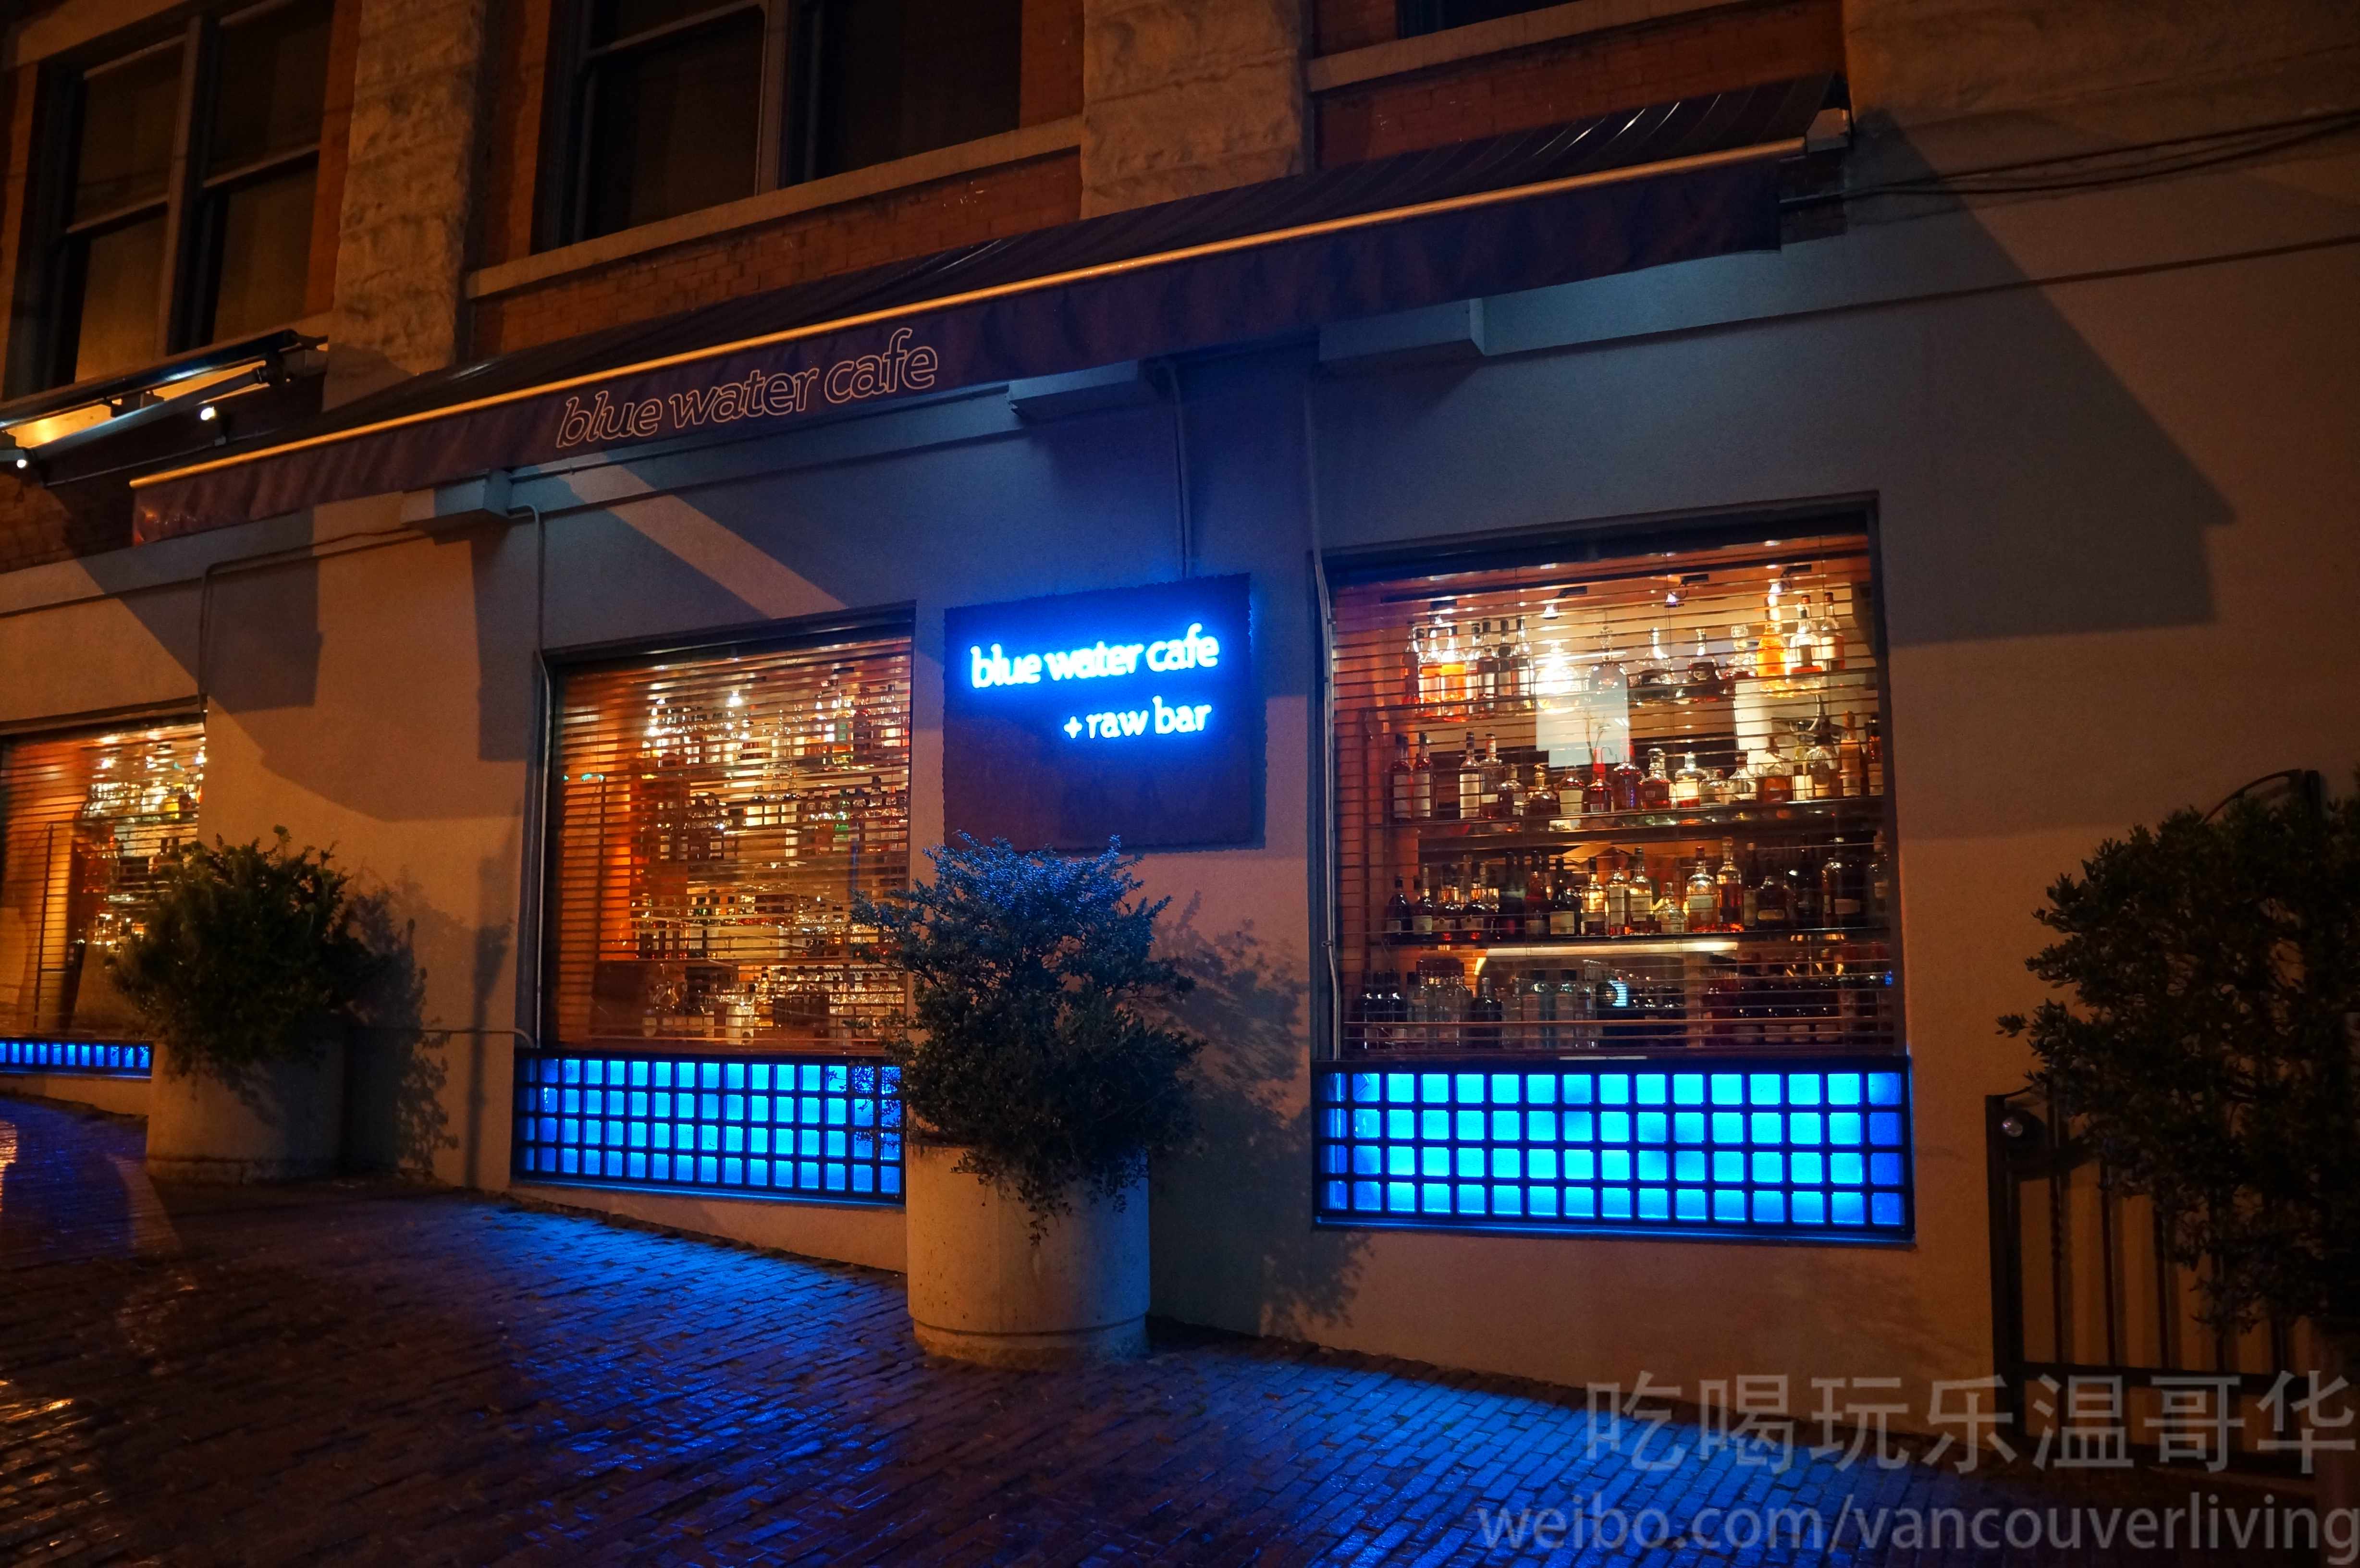 Blue Water Cafe + Raw Bar - Hamilton Street